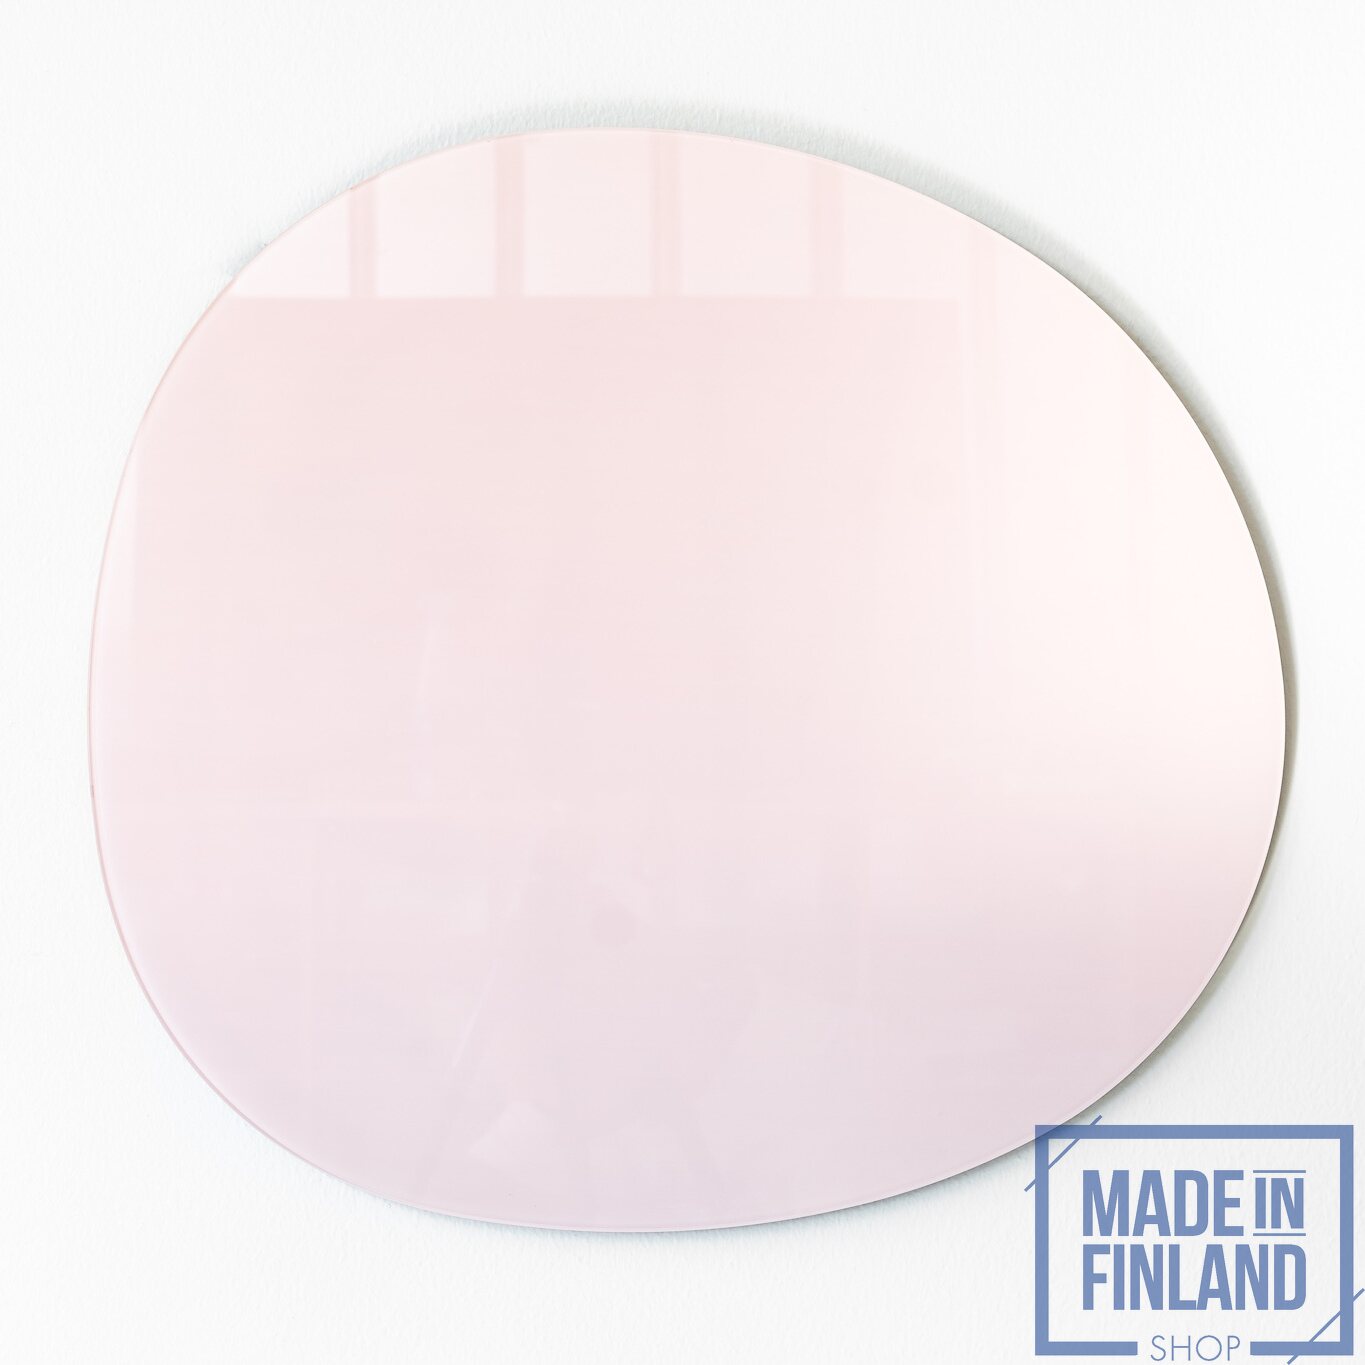 products LAMPI schrijf- en magneetbord klein | Prikborden, & Akoestische kunstpanelen | Made in Finland Shop Nederlands